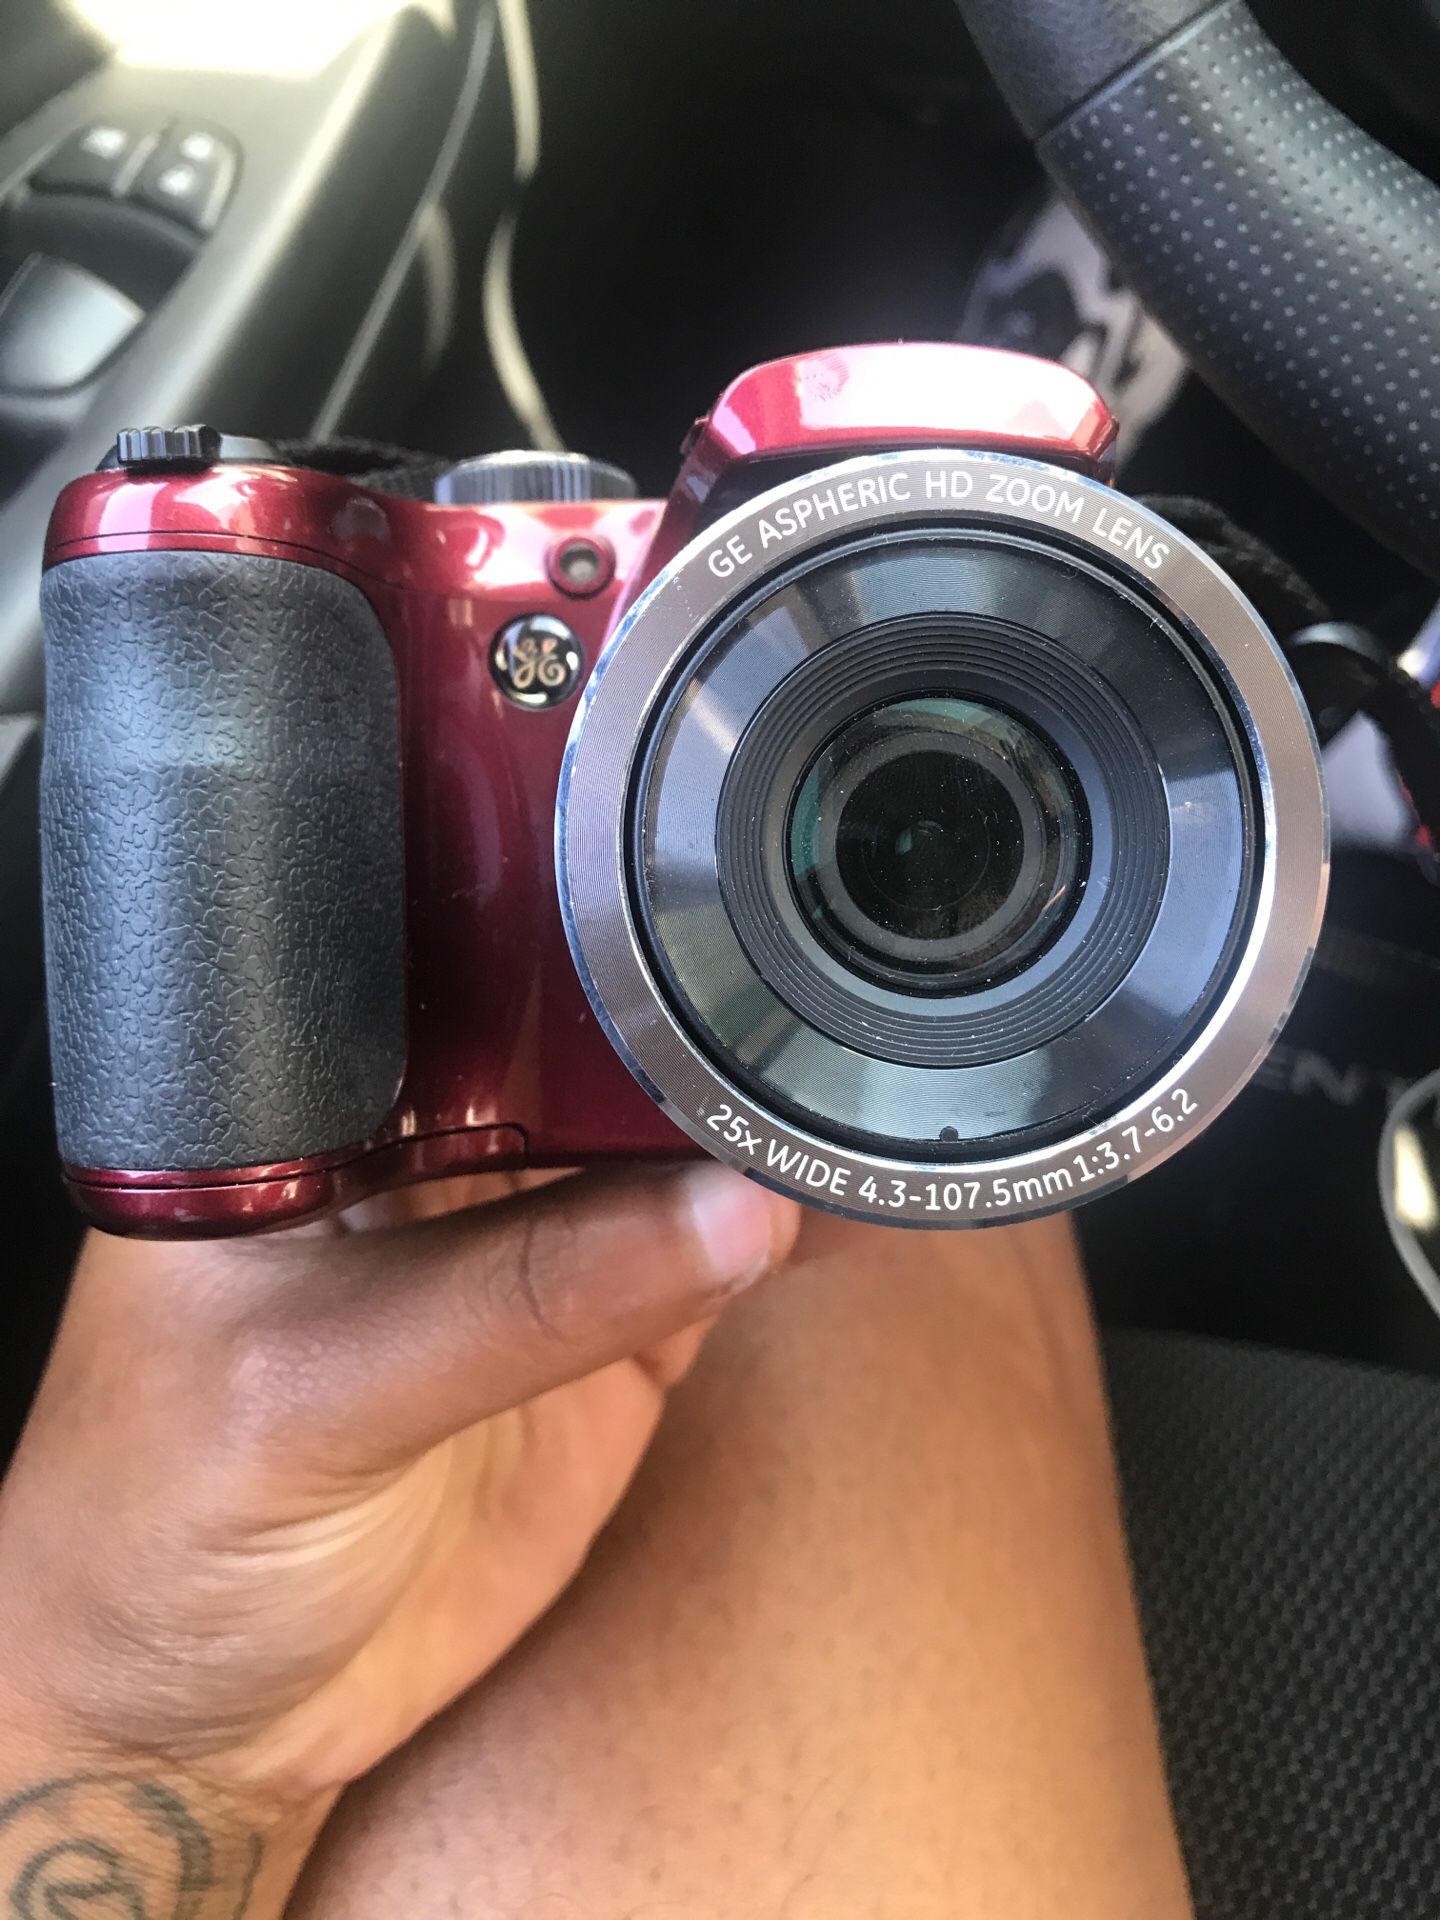 GM digital camera